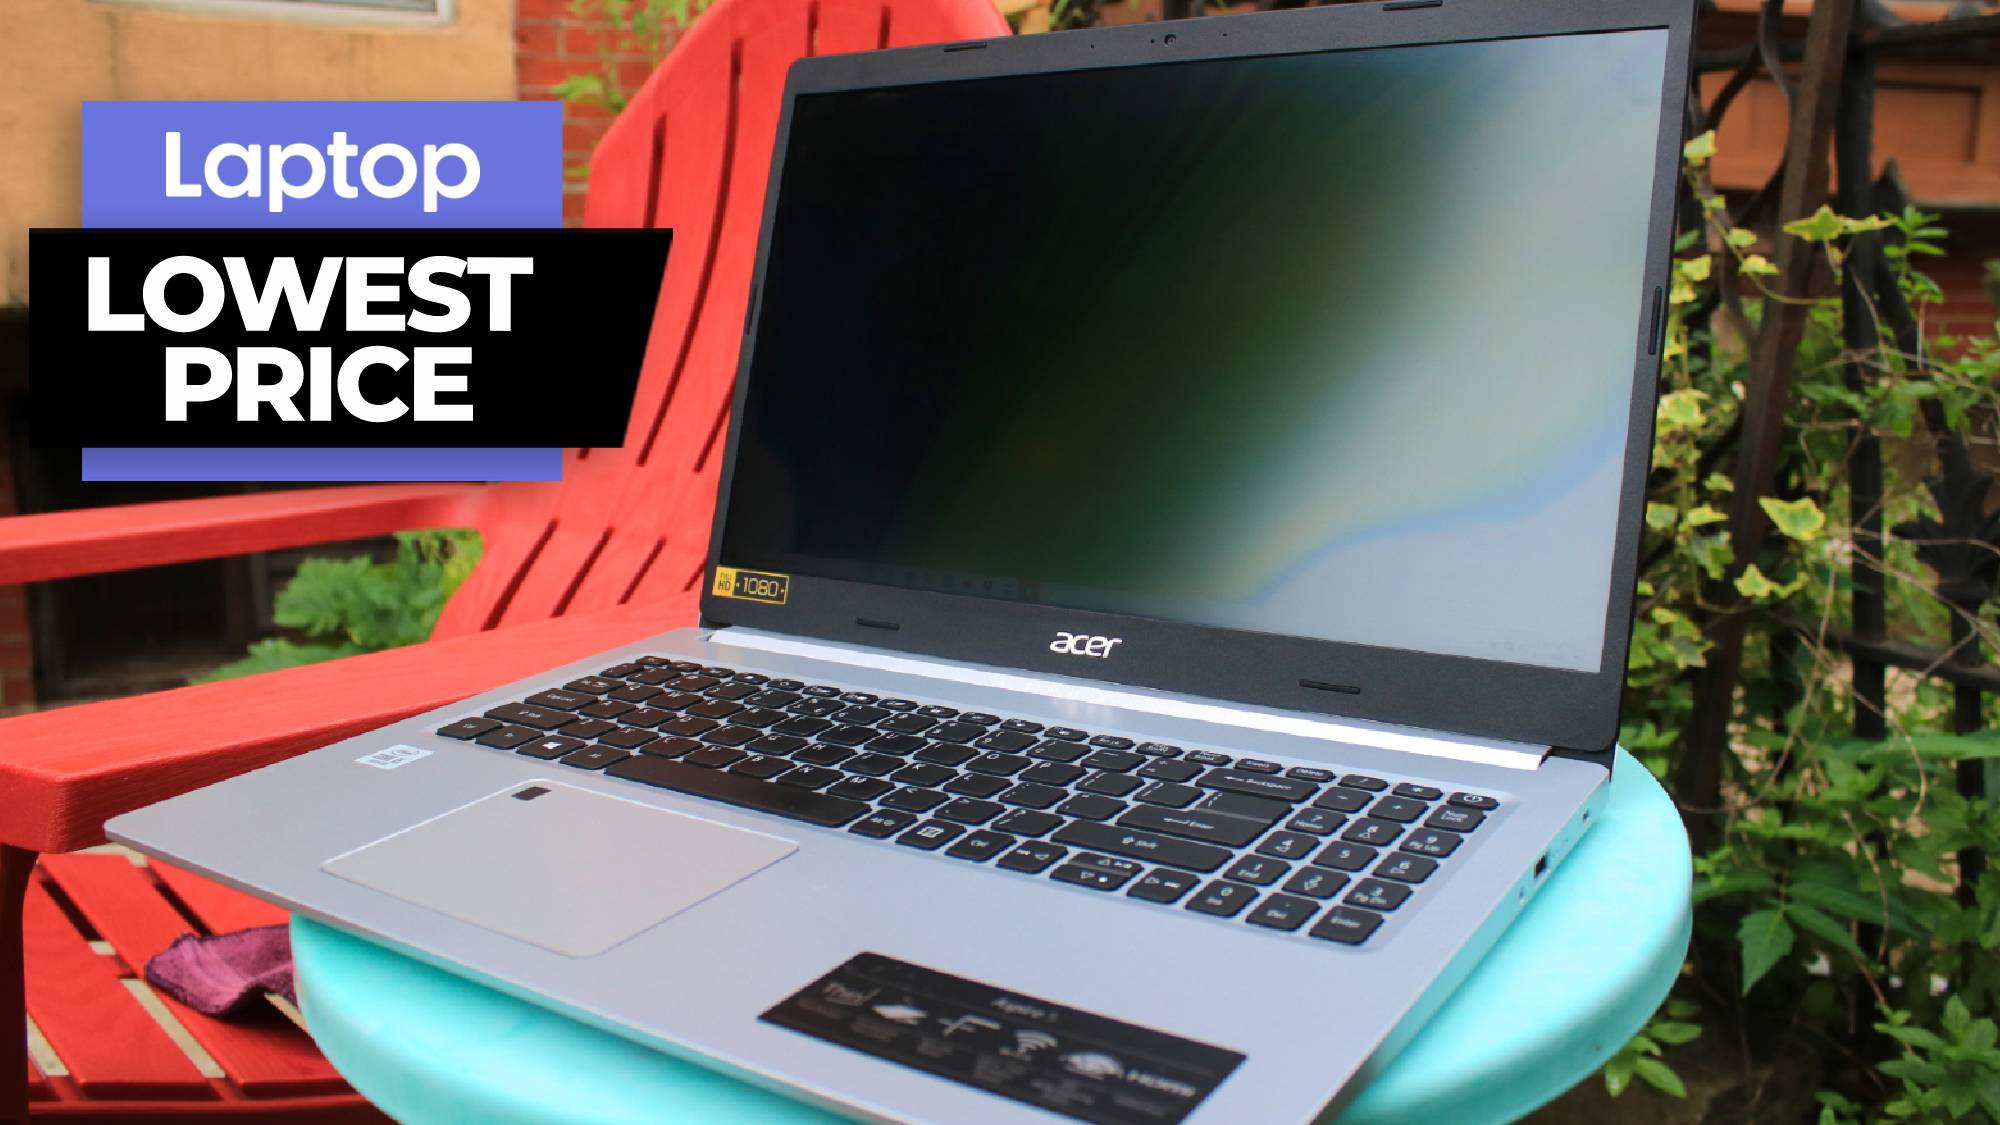 Cheap laptop deal: AMD Ryzen Acer Aspire 5 Slim for just $299